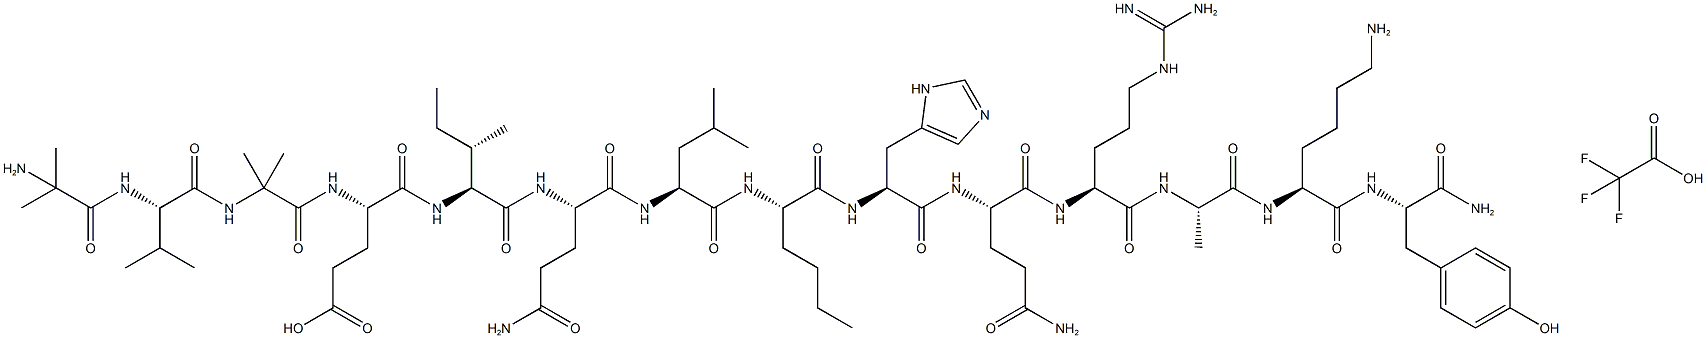  DPC-AJ1951 (trifluoroacetate salt)